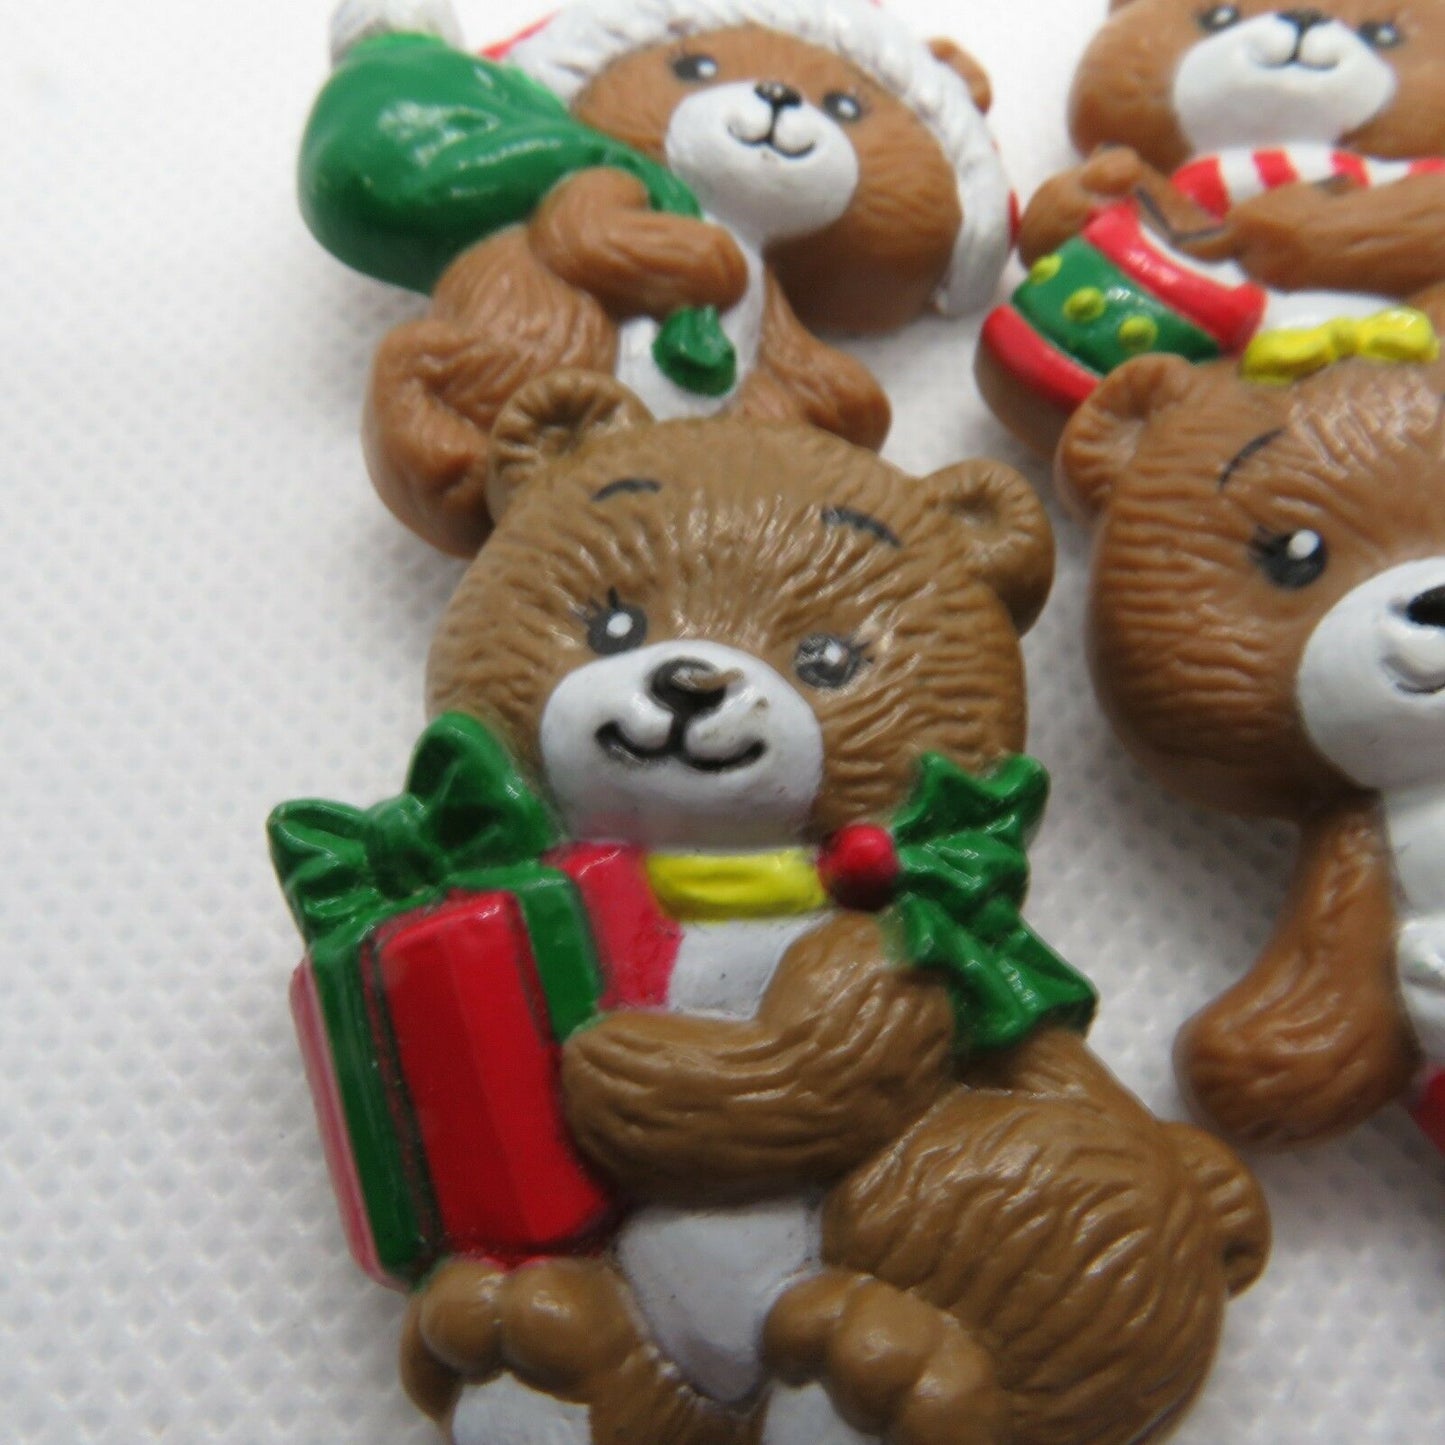 Vintage Teddy Bear Christmas Pin Brooch Set Russ Santa Stocking Present Drum - At Grandma's Table